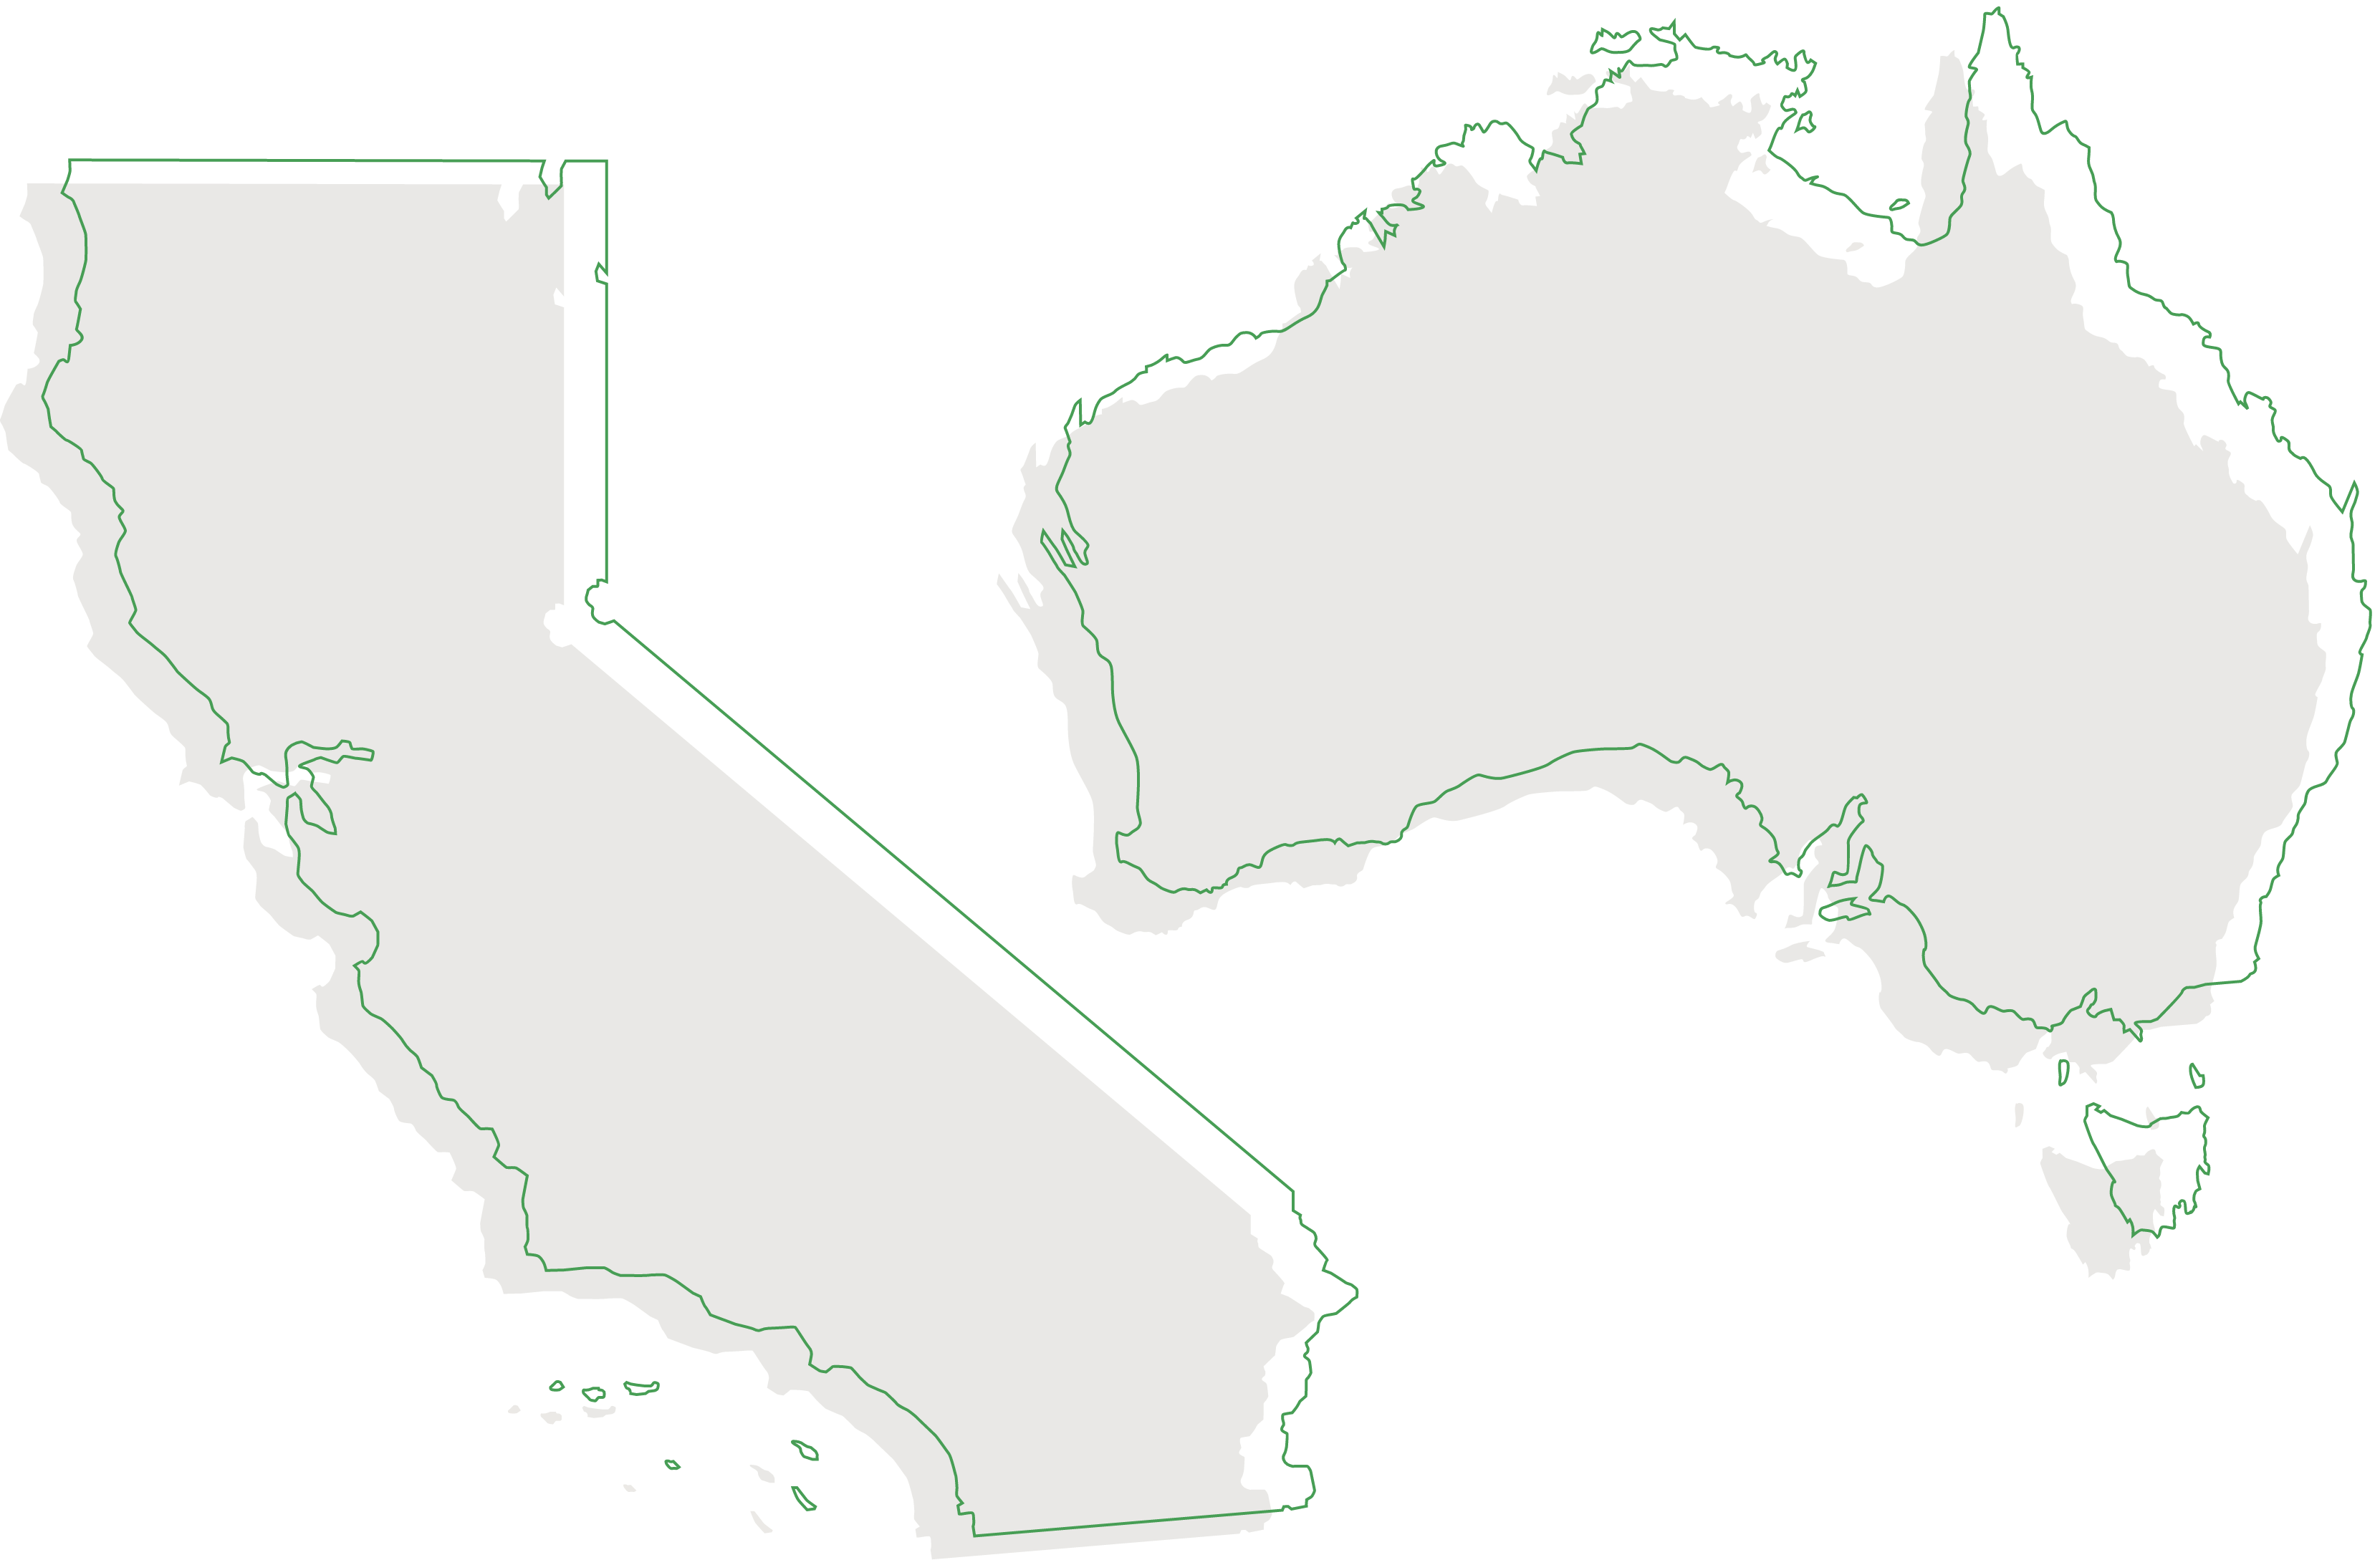 California and Australia